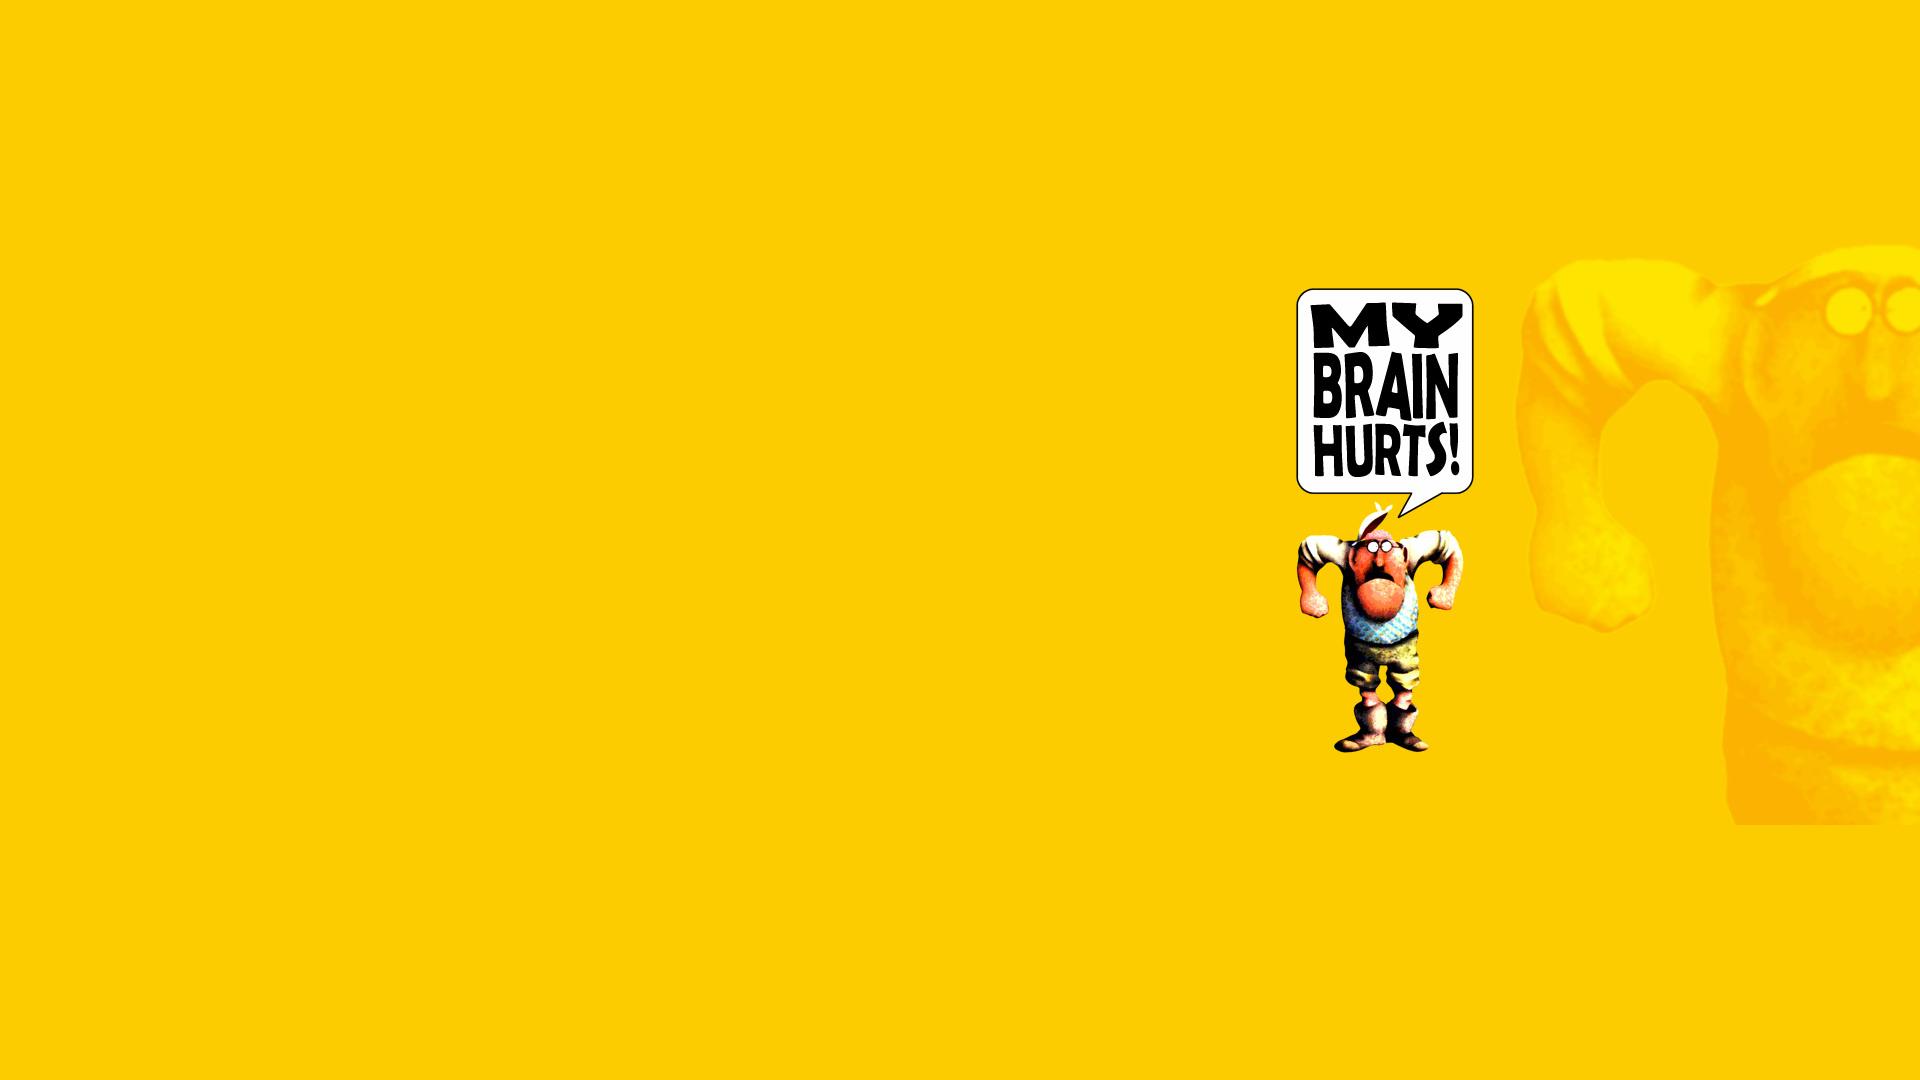 Monty Python Yellow cartoon humor movies text wallpaper background